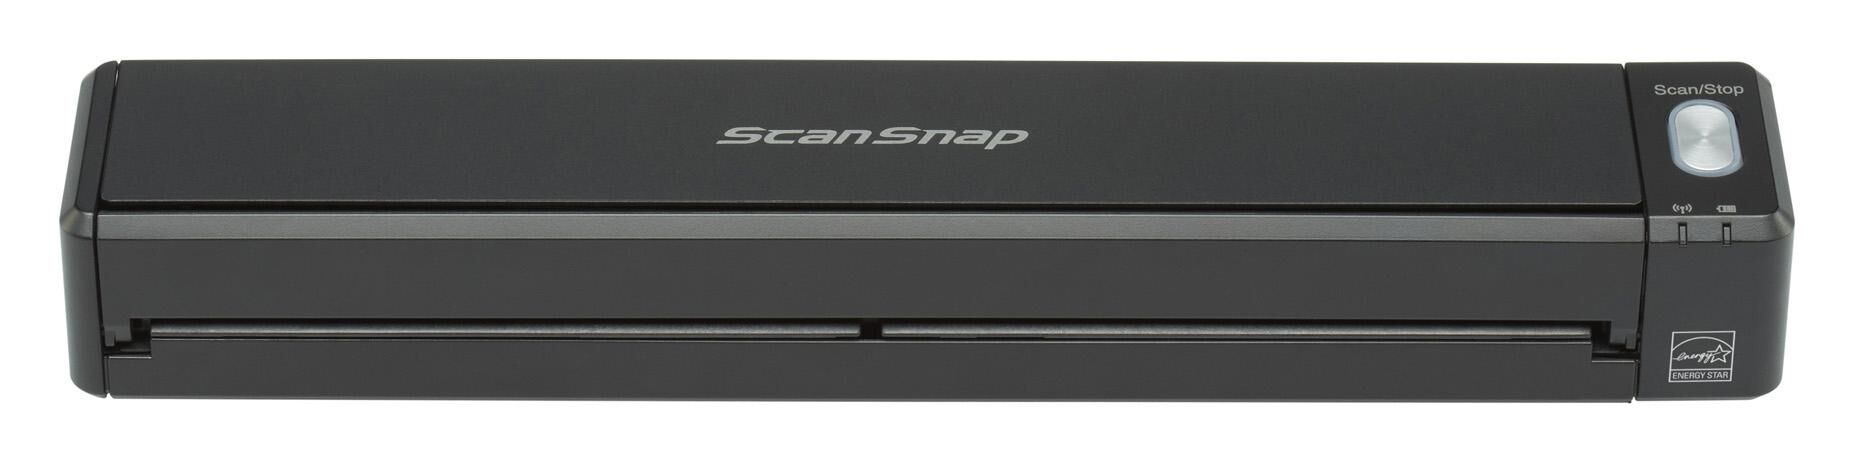 Fujitsu Scanner Ix100 600x600 Dpi Cdf + Sheet-fed A4 Preto - Fujitsu